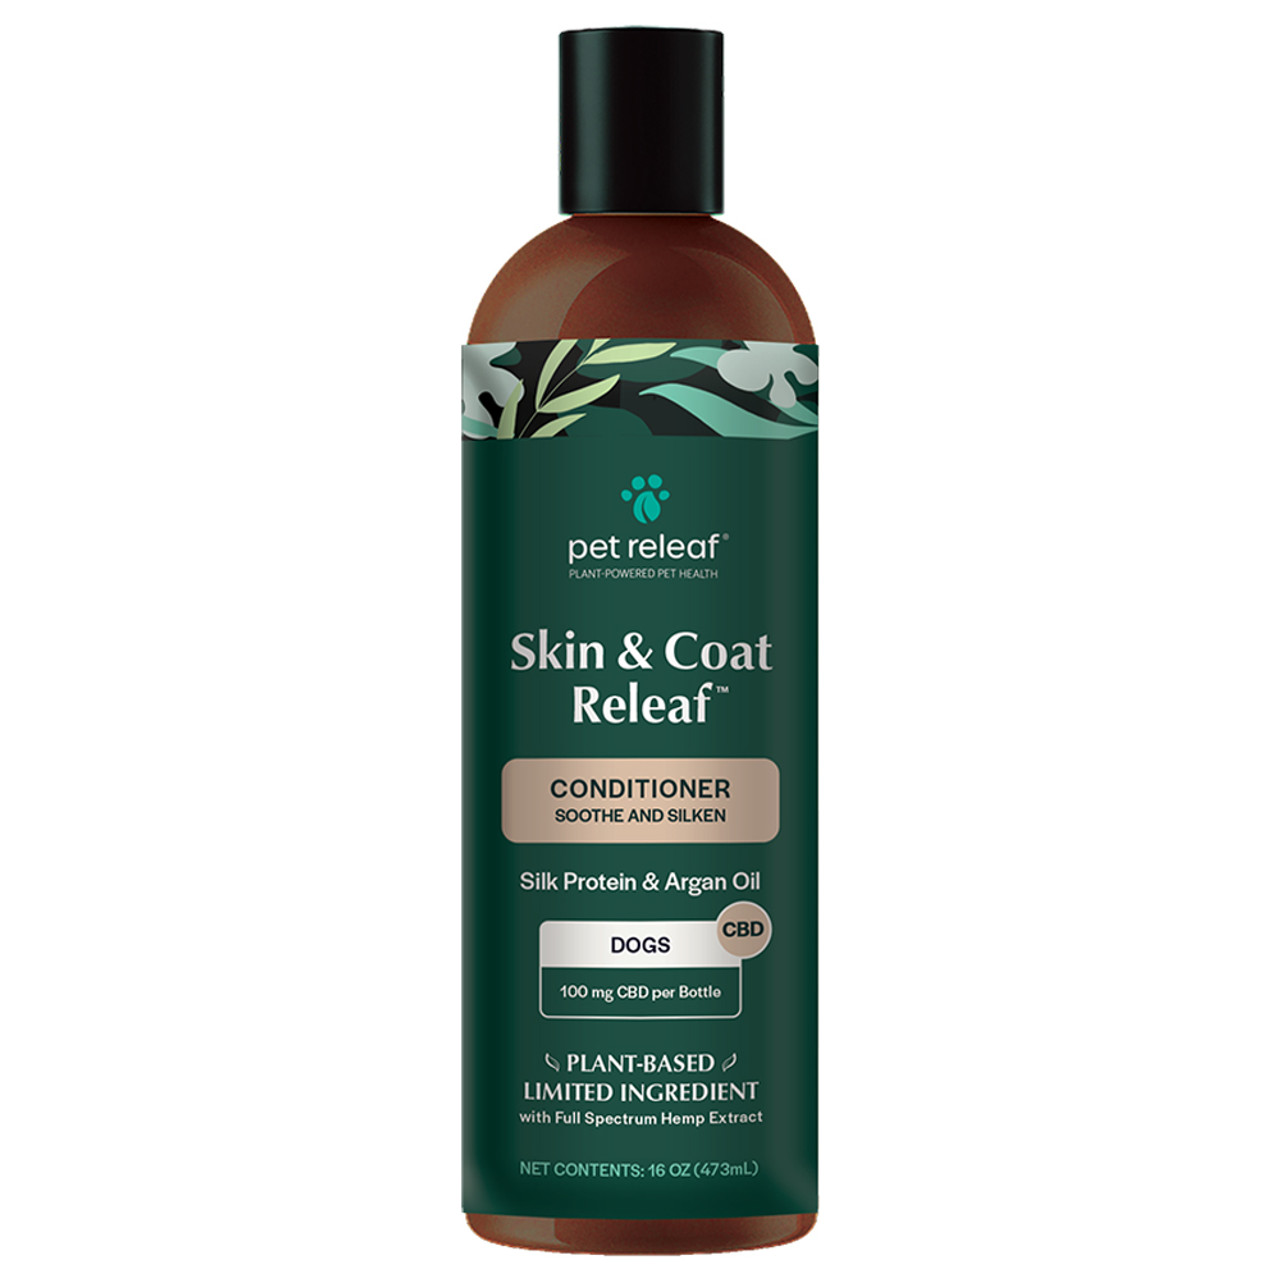 Pet Releaf Skin & Coat Releaf Soothe & Silken w/ Silk Protein & Argan Oil Dog CBD Conditioner - Front